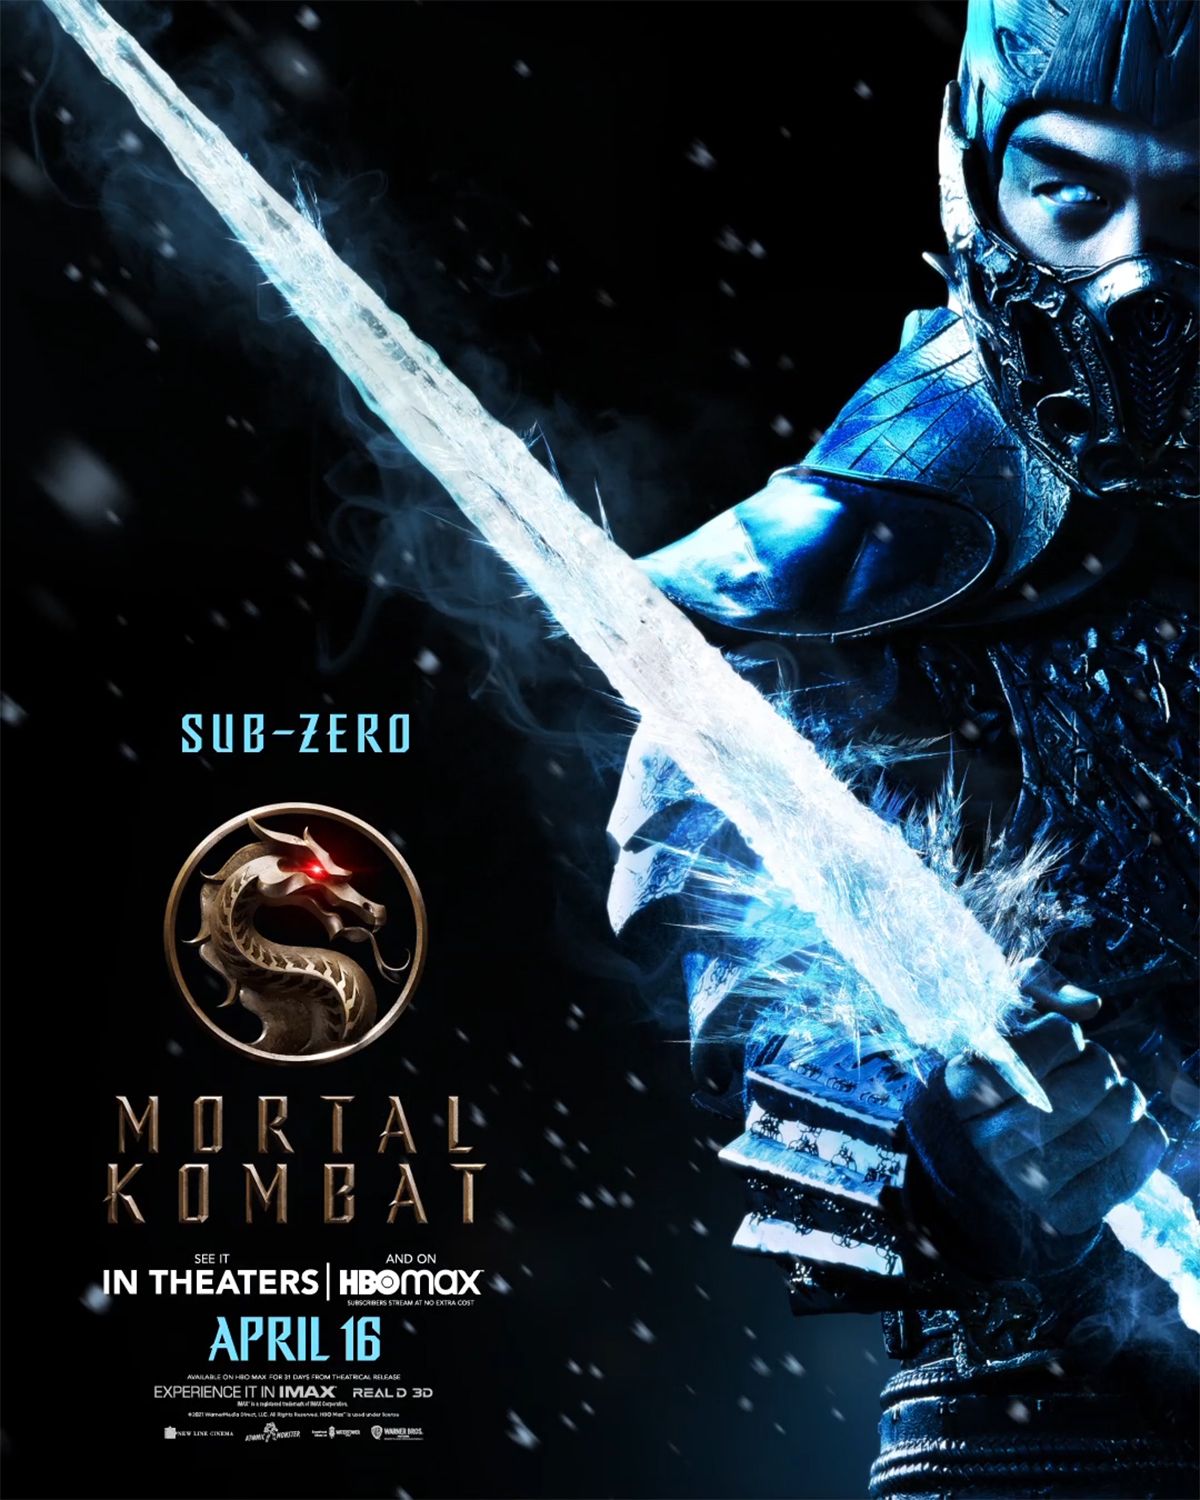 Sub-Zero character poster for Mortal Kombat movie